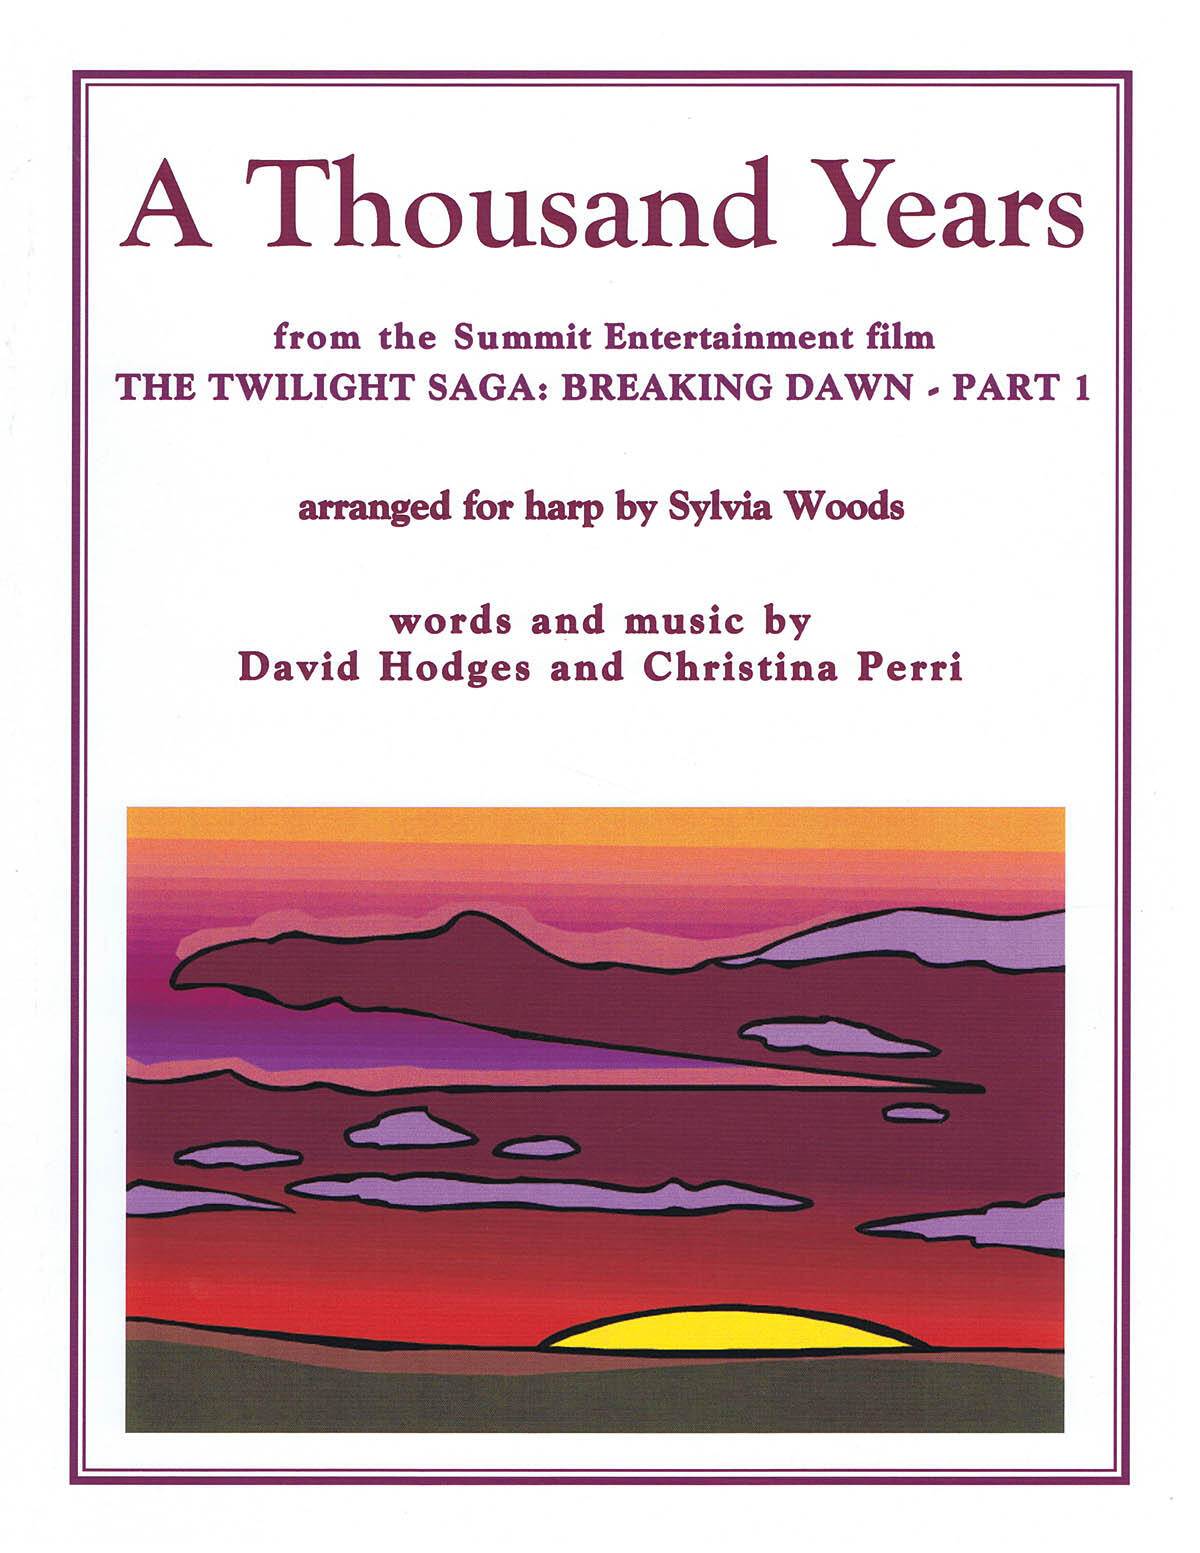 A Thousand Years from The Twilight Saga: Breaking Dawn : photo 1